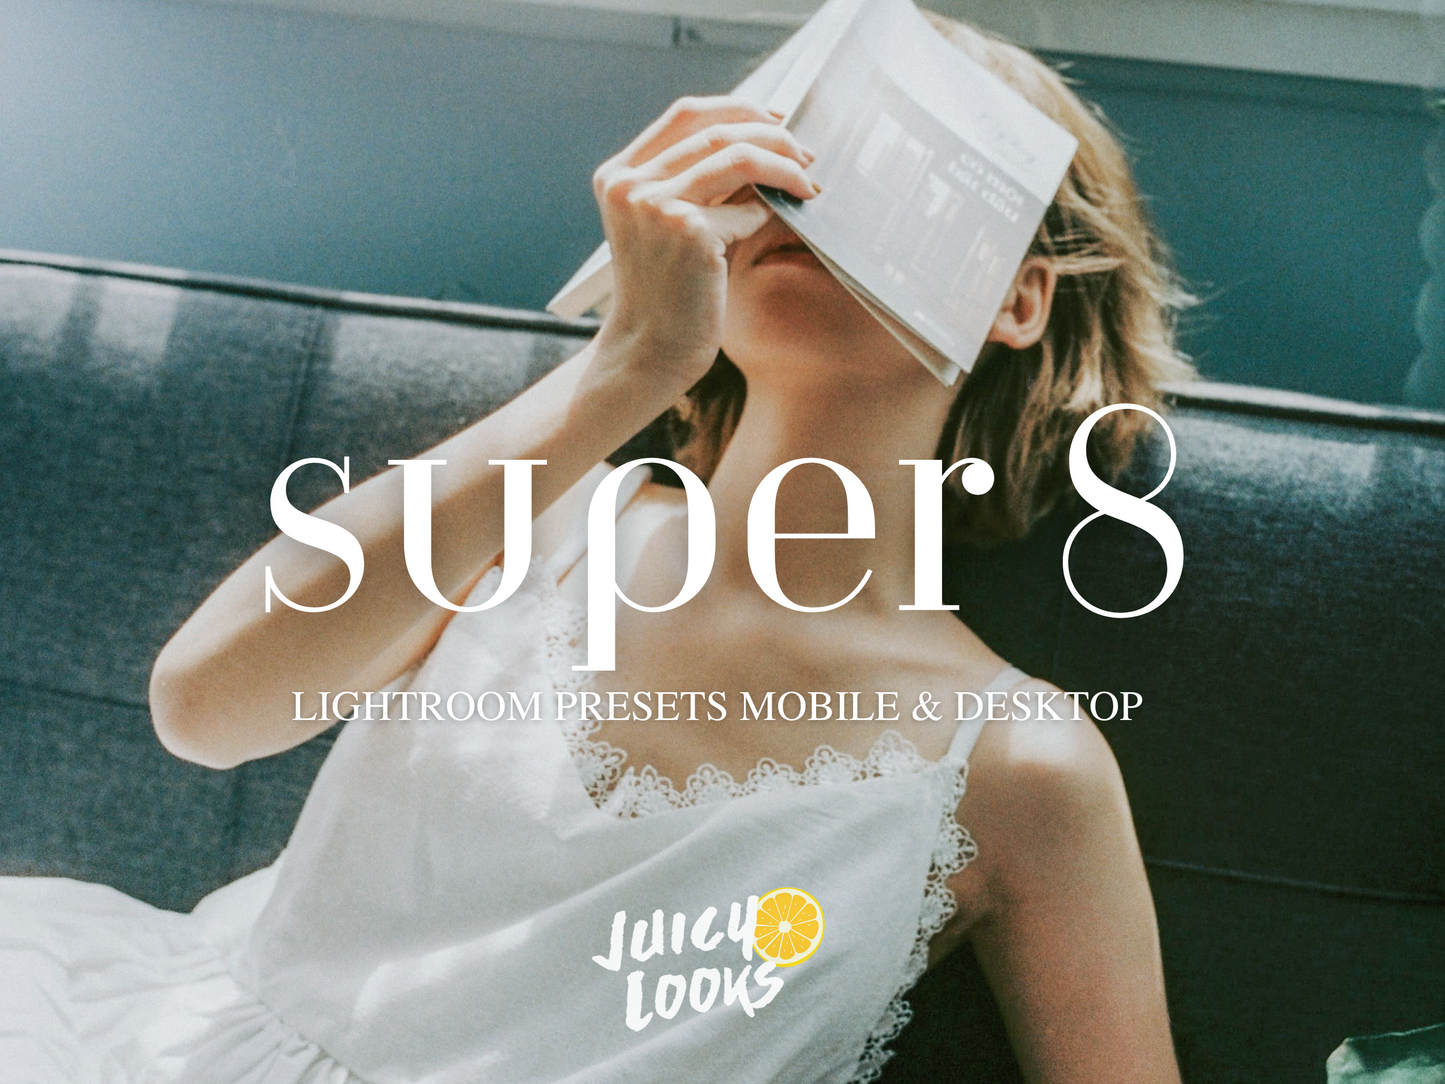 Super 8 Film Lightroom Presets for Mobile & Dekstop - Juicy Looks Presets